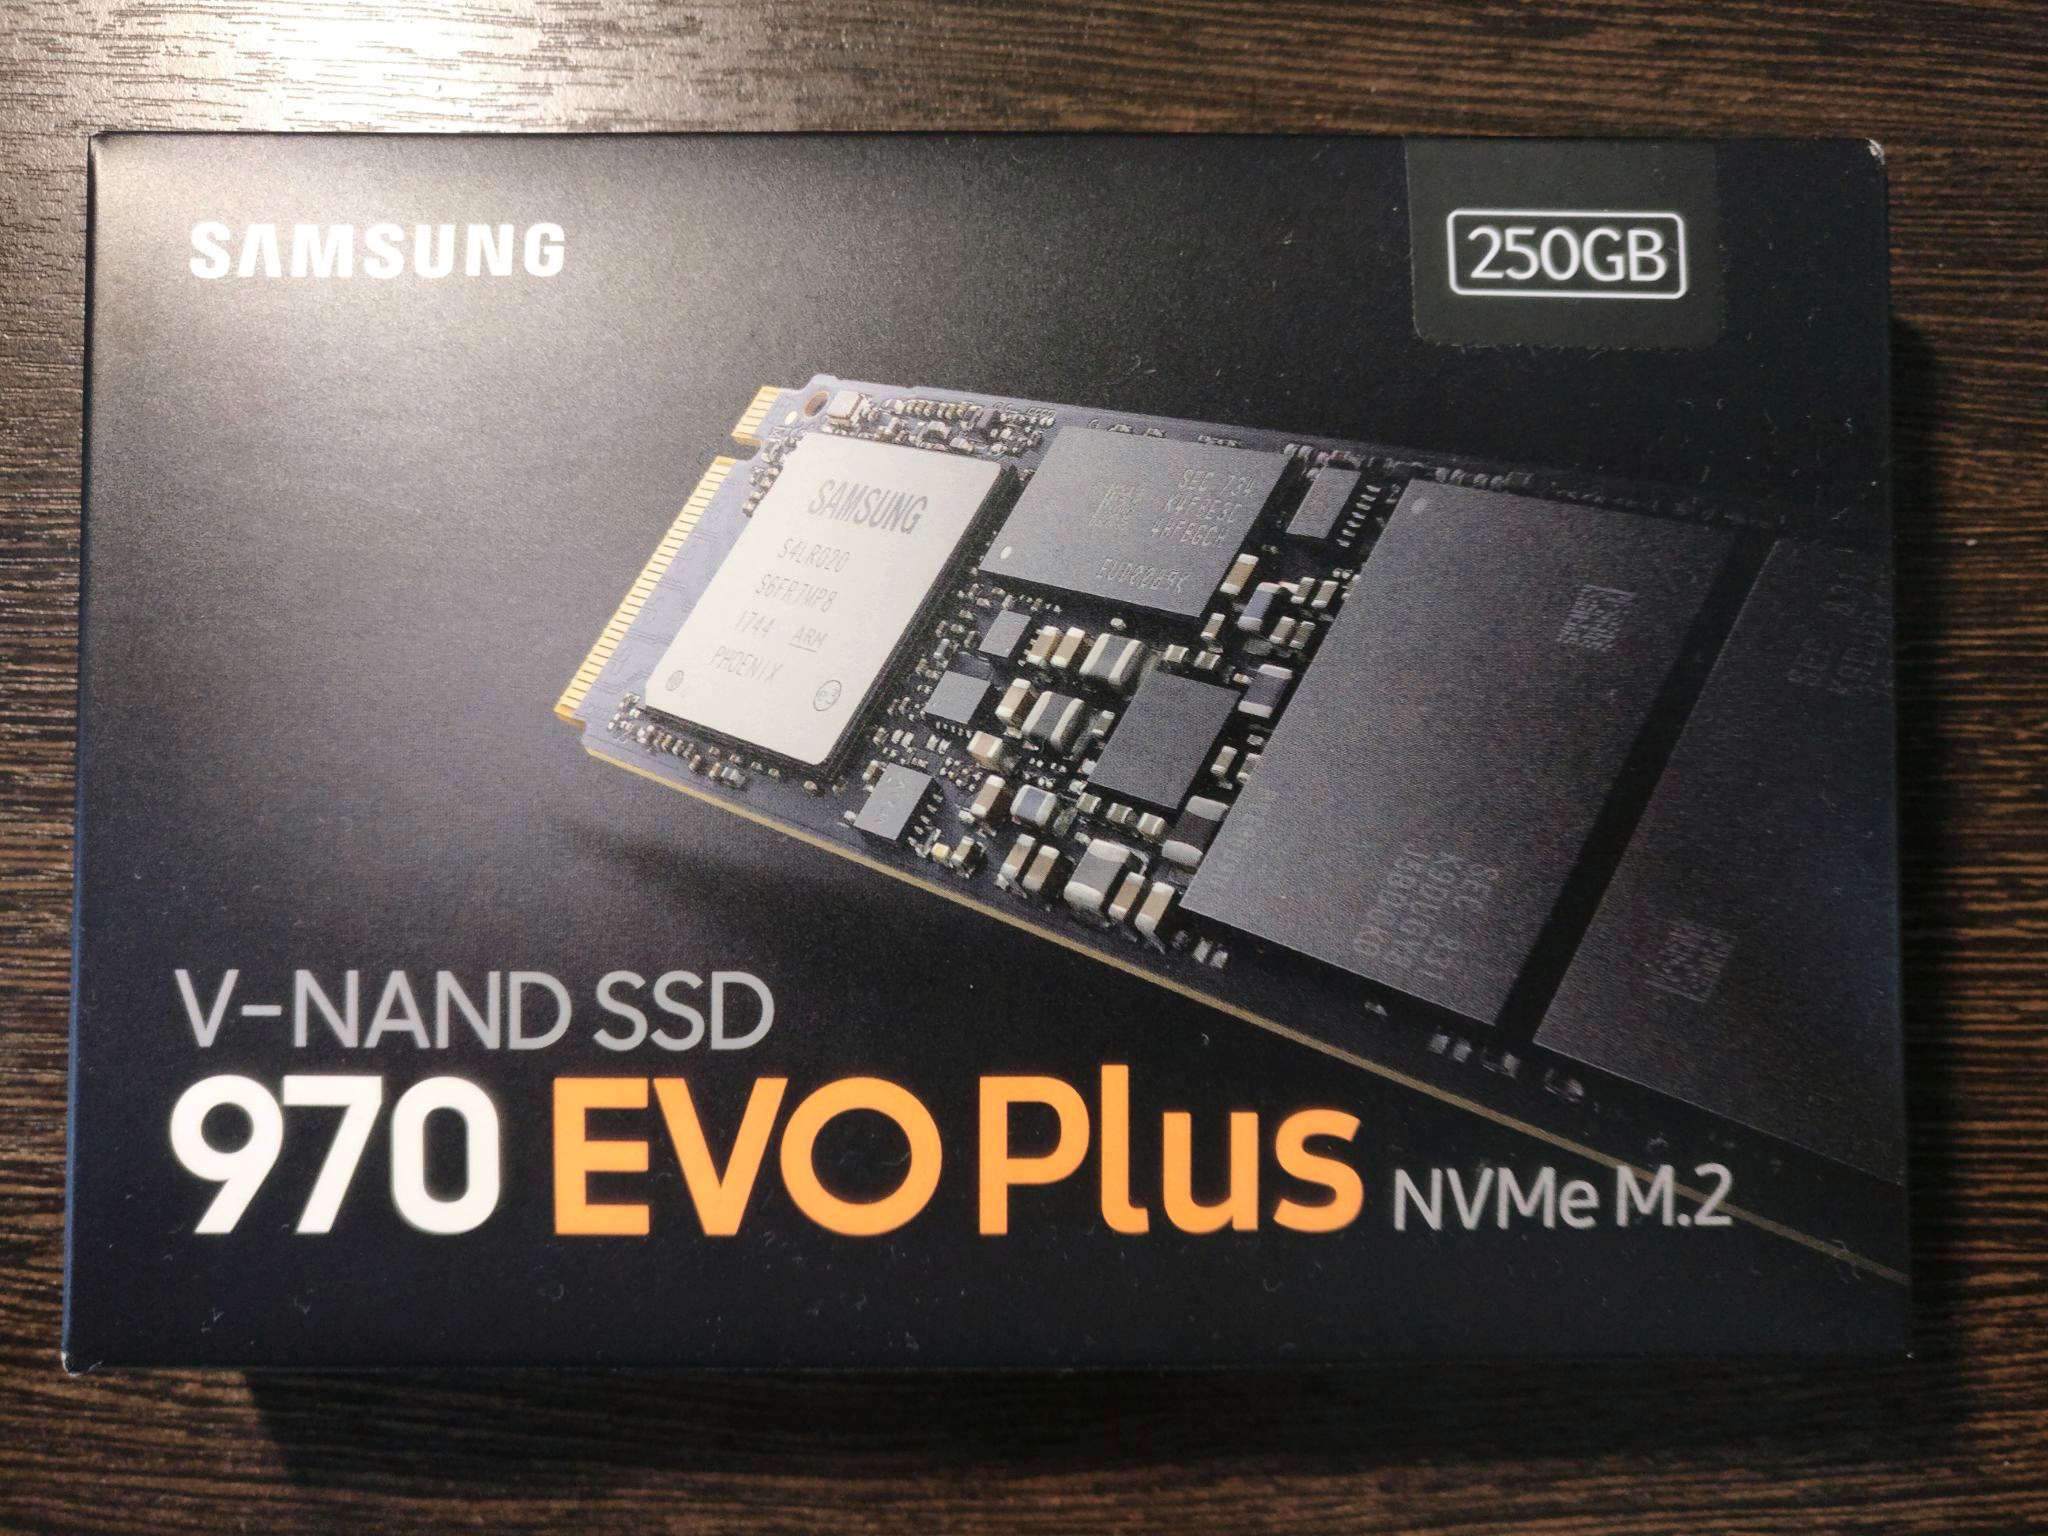 Ssd samsung 970 evo plus купить. SSD Samsung 970 EVO. SSD Samsung 970 EVO Plus m.2 MZ-v7s250bw. Samsung SSD 970 EVO Plus 250gb. SSD M.2 накопитель Samsung 970 EVO Plus.